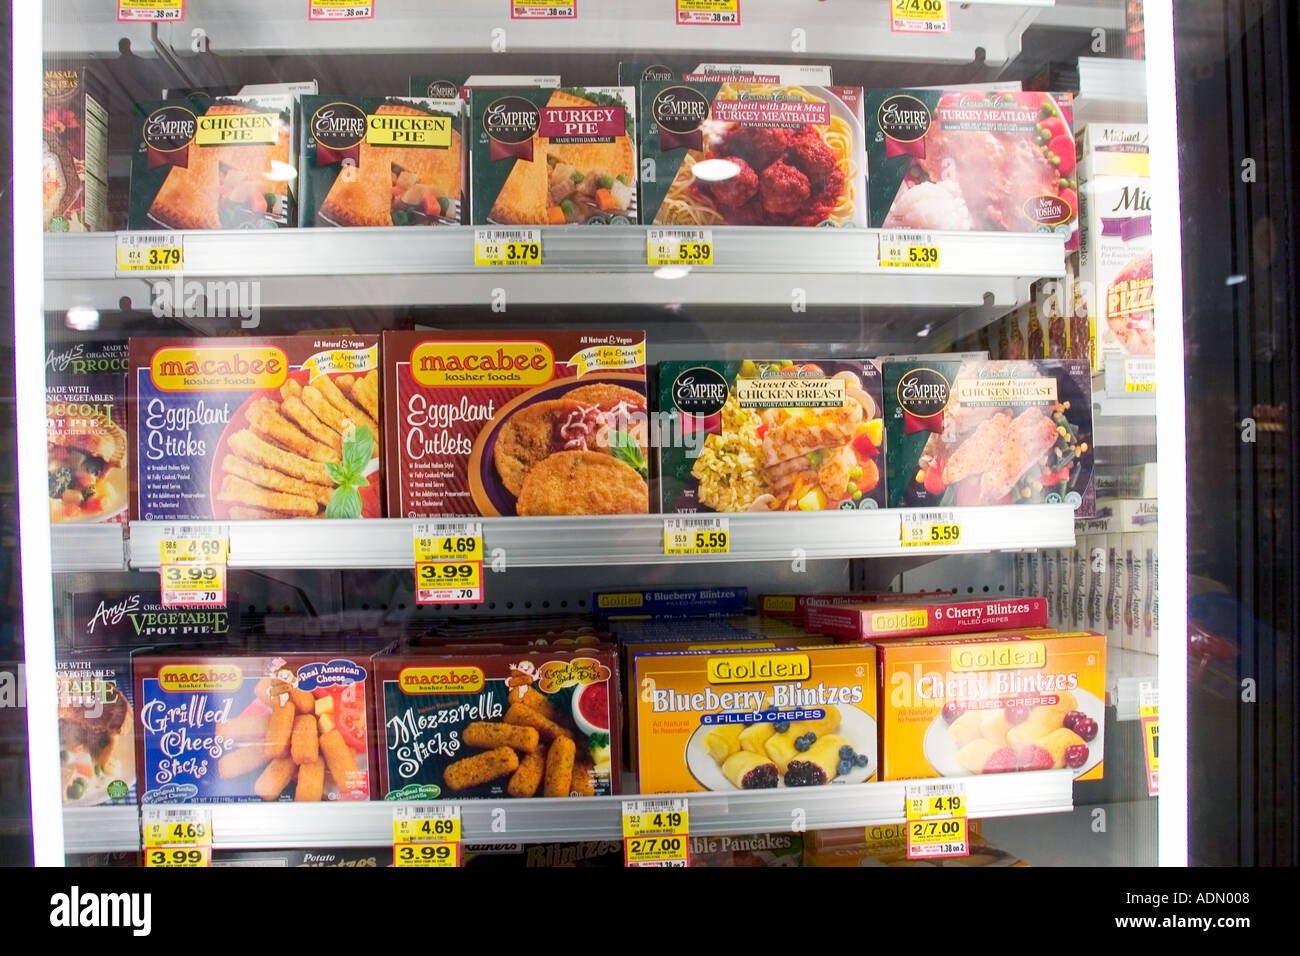 https://c8.alamy.com/comp/ADN008/kosher-frozen-food-freezer-of-large-american-supermarket-ADN008.jpg